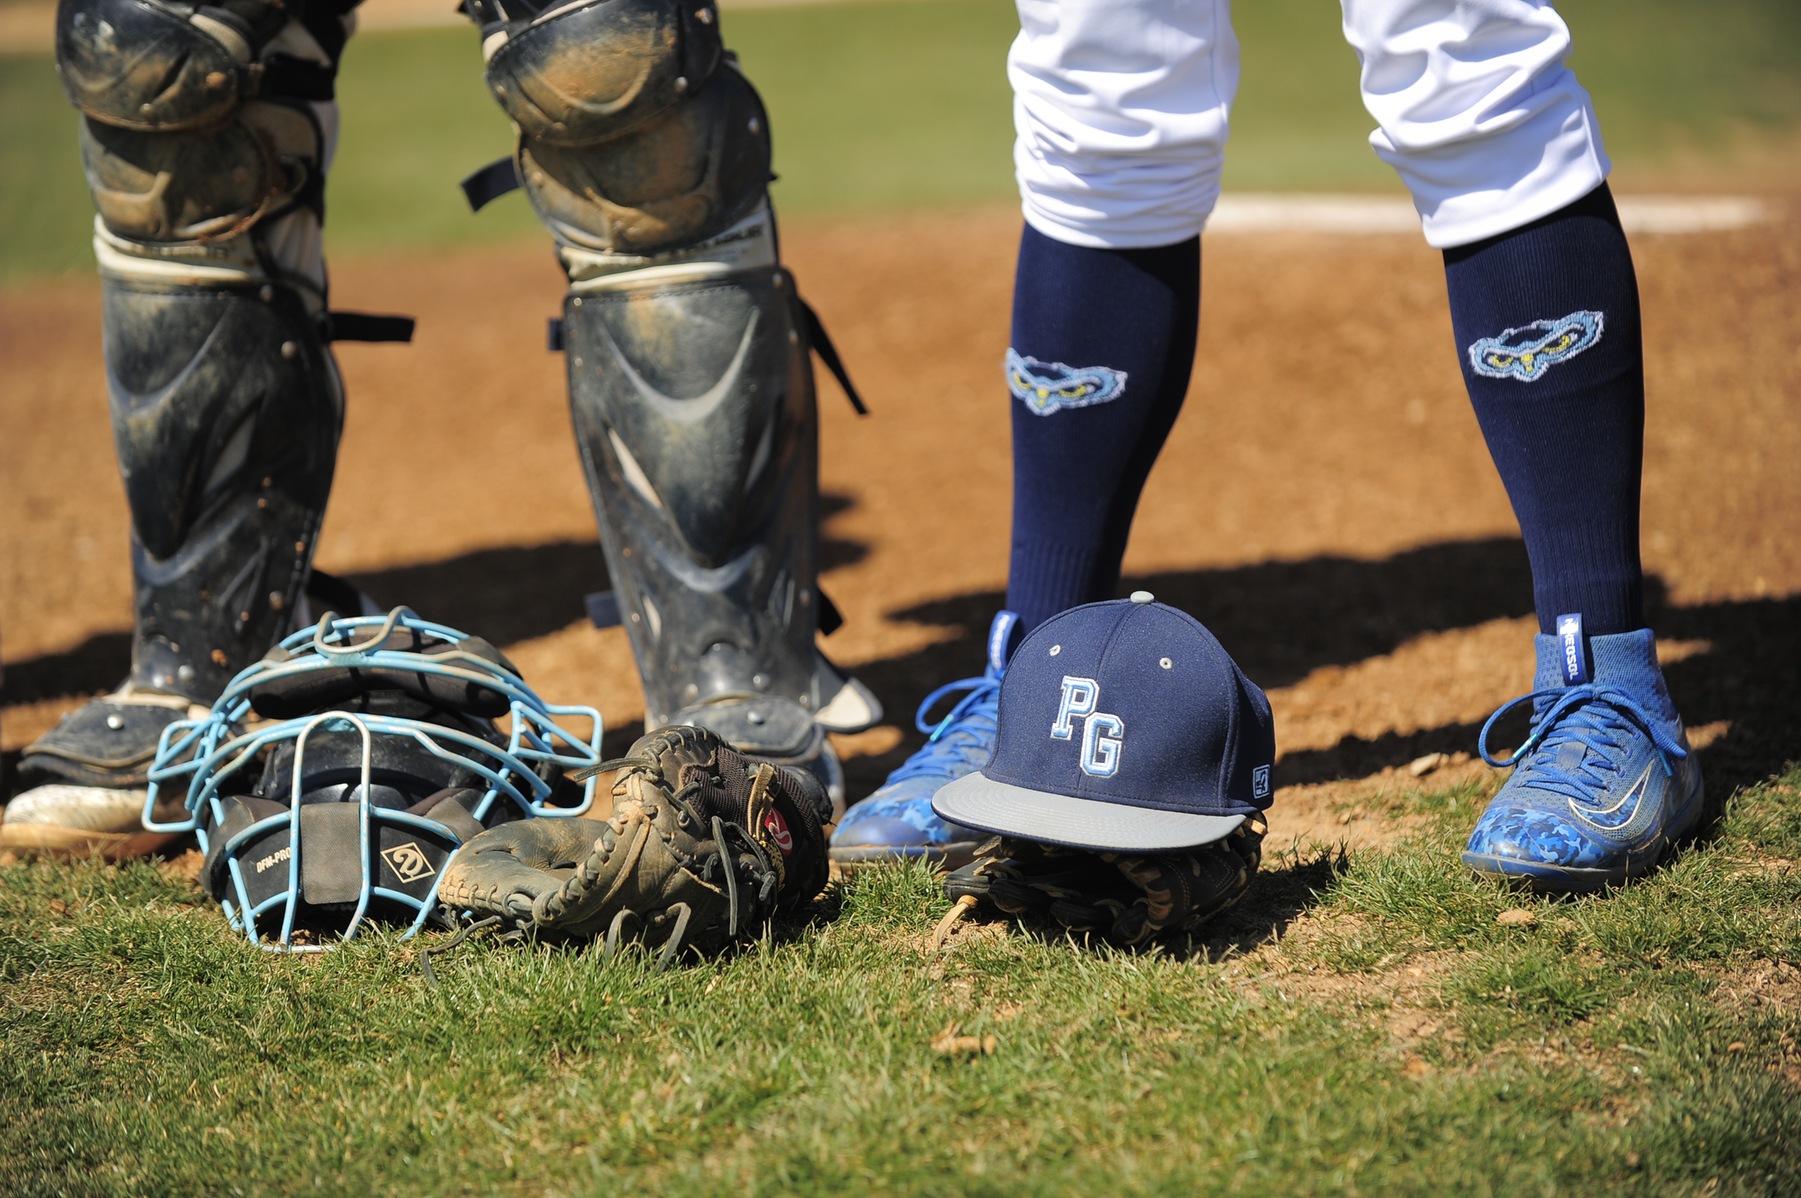 Prince George's Baseball Stays At No. 8 In NJCAA Division III Baseball Rankings